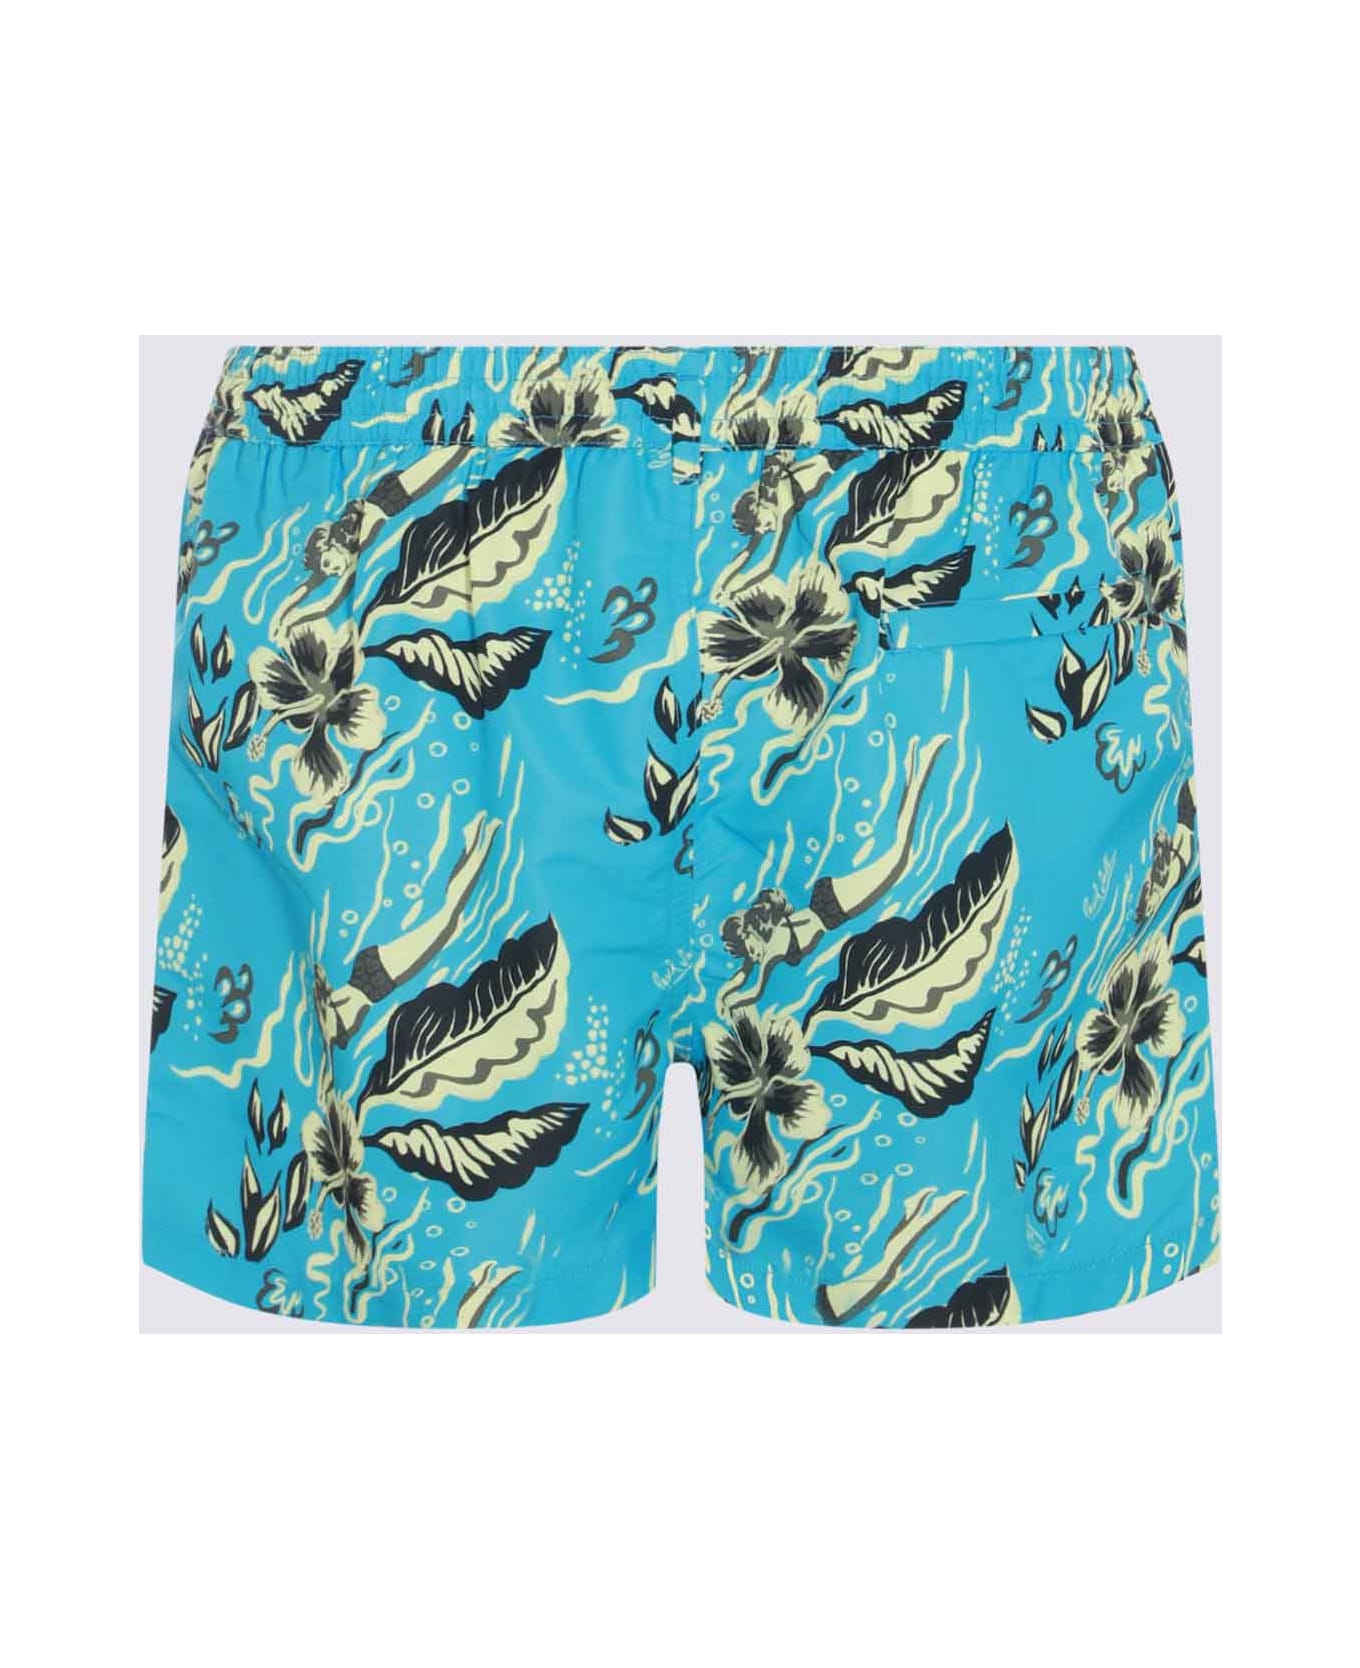 Paul Smith Light Blue Multicolour Swim Shorts - Blue